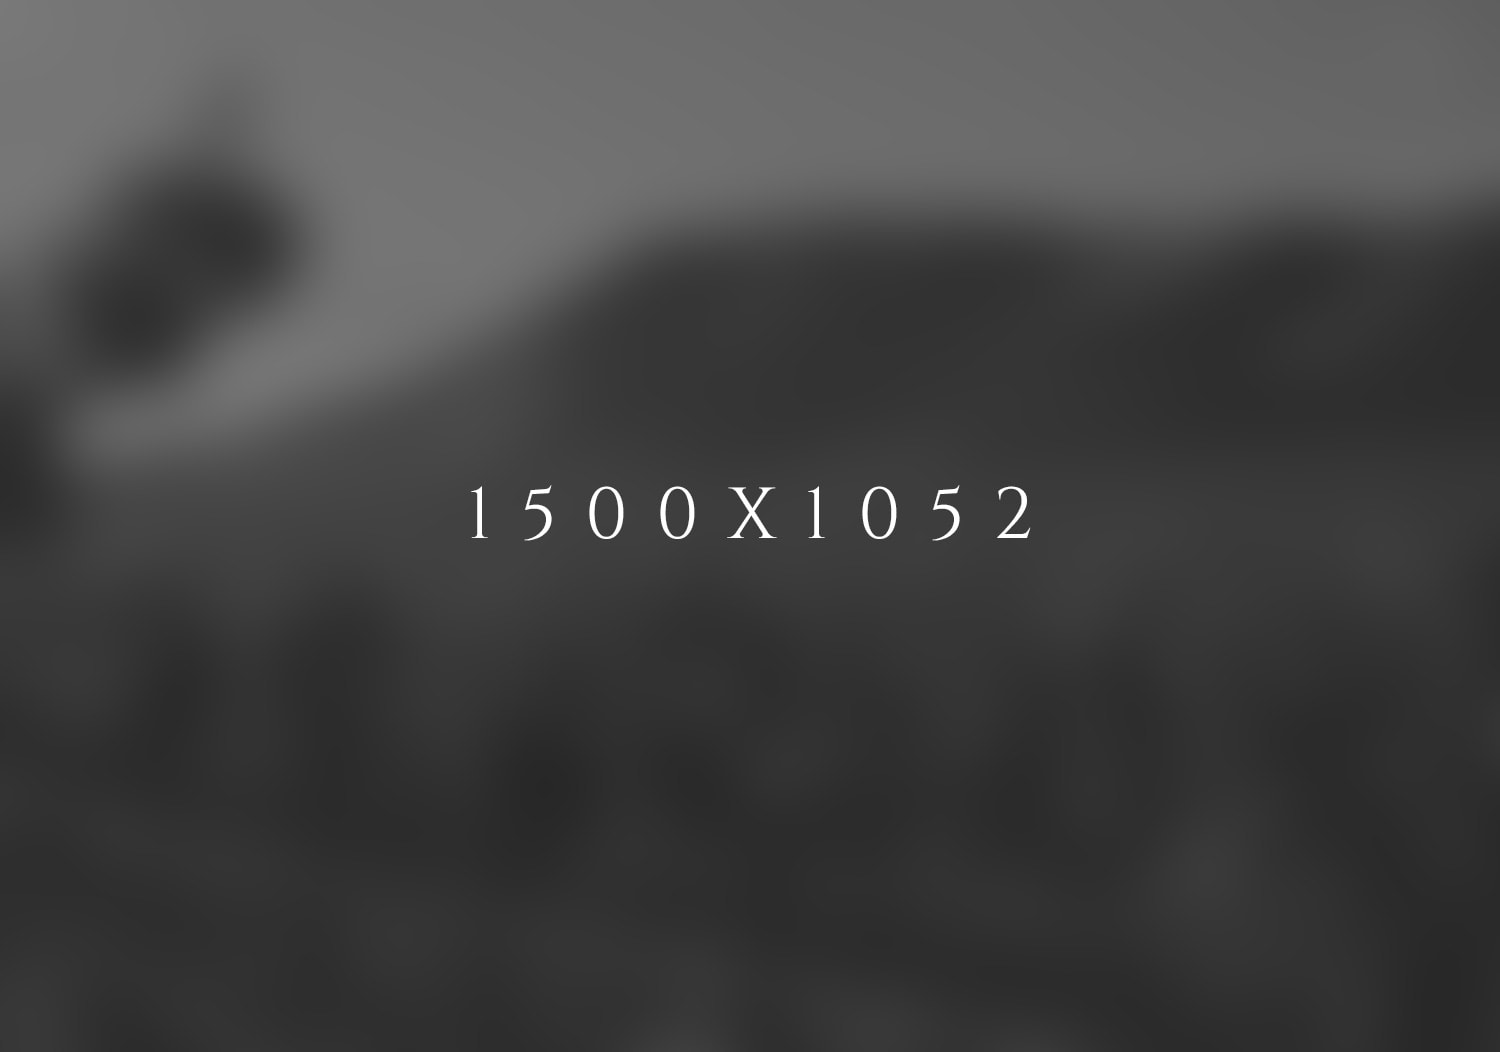 1500x1052-min - Copy (16).jpg